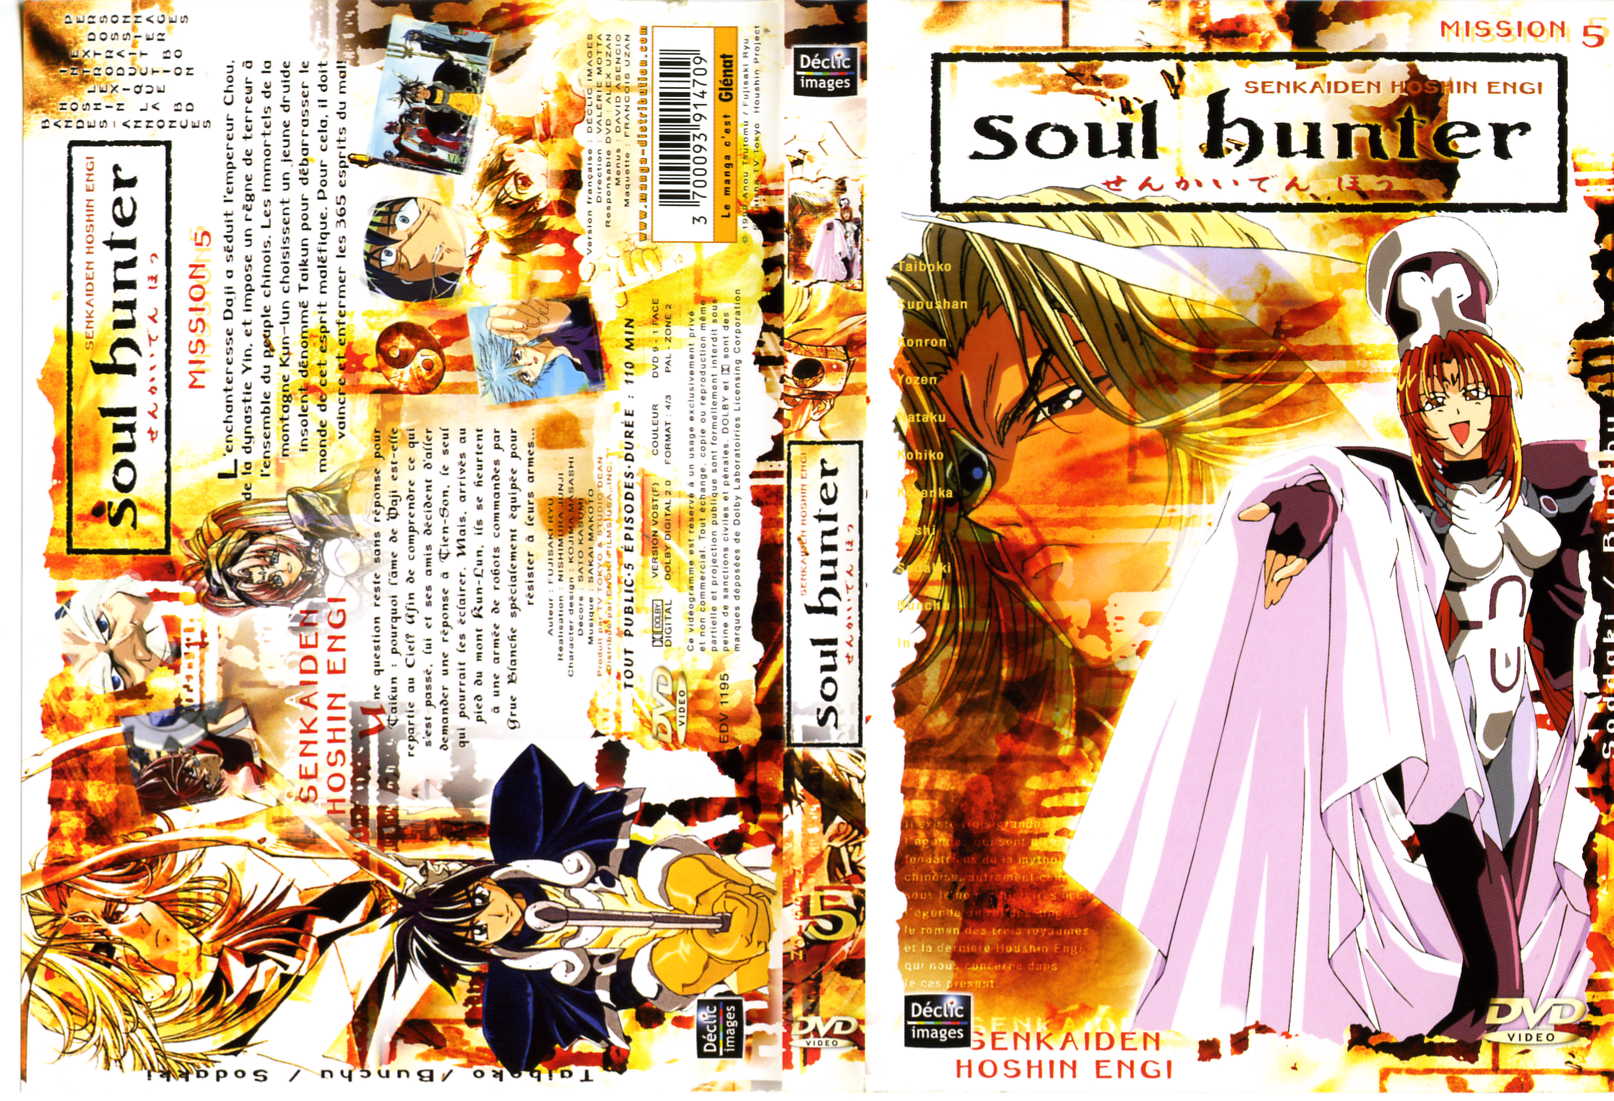 Jaquette DVD Soul hunter vol 5